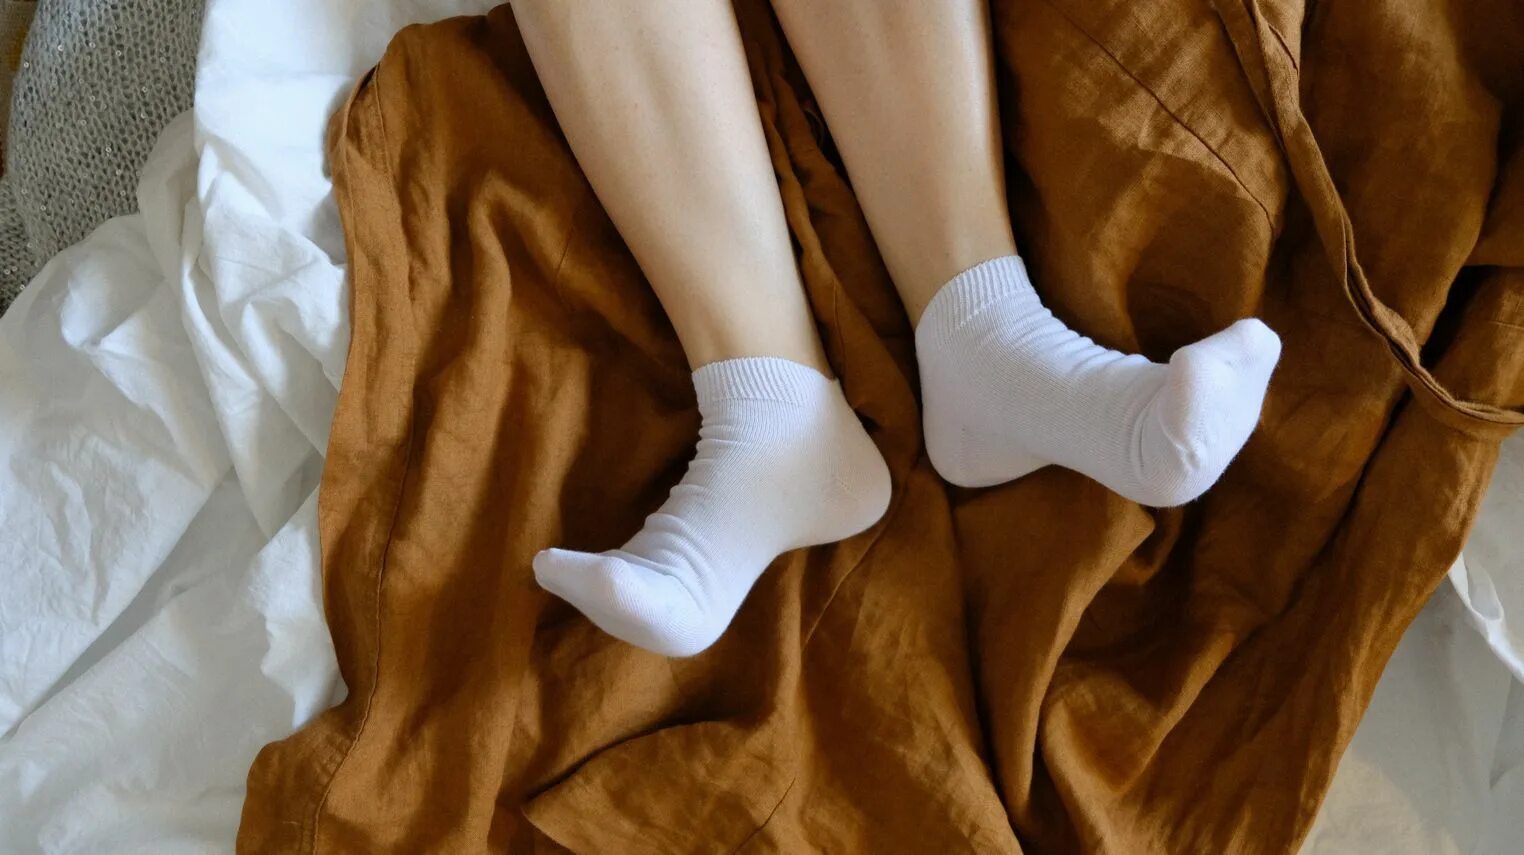 Ножки в носочках. Белые носки. Носочки белые женские. Ступни в носочках. В носочках юбка